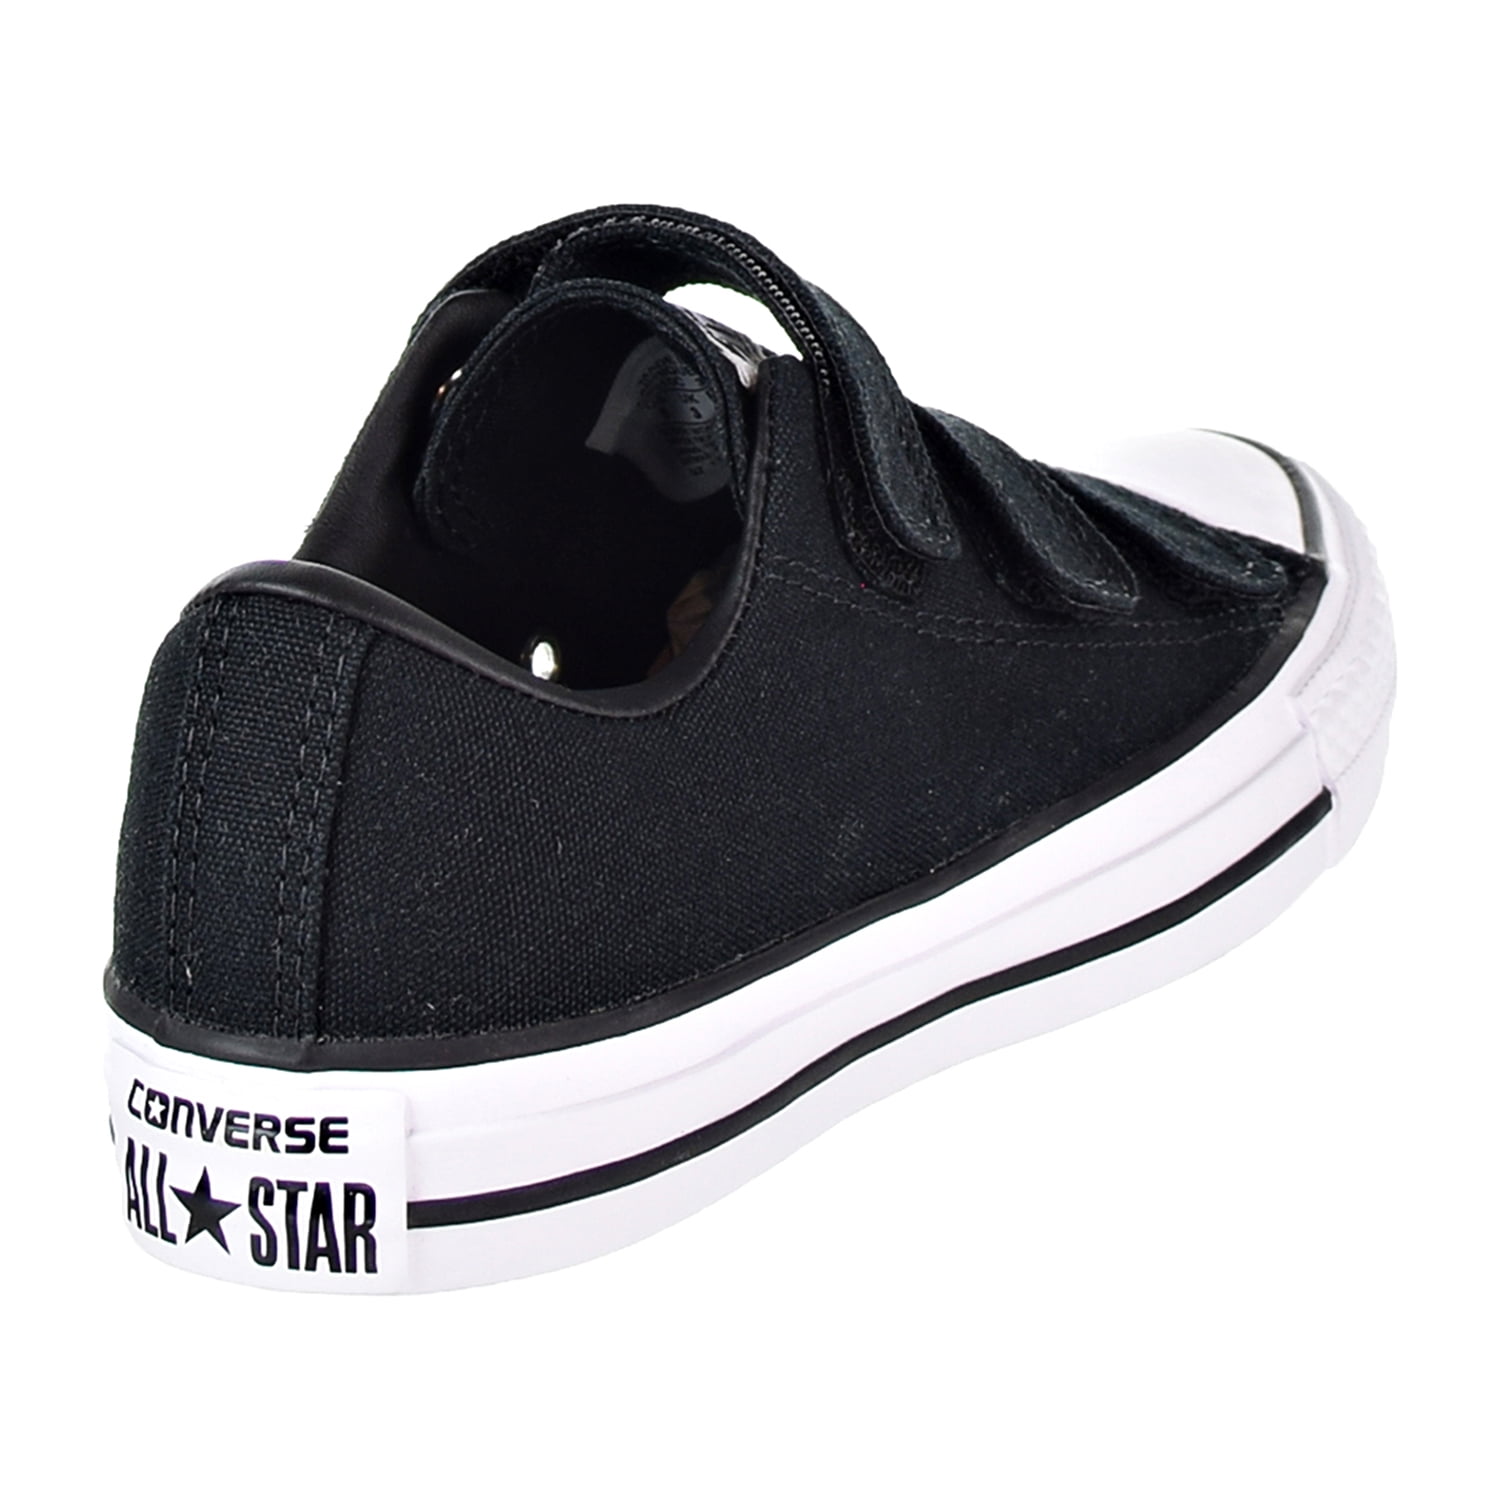 Chuck Taylor Star 3 Velcro Oxford, Black/Black/White - Walmart.com